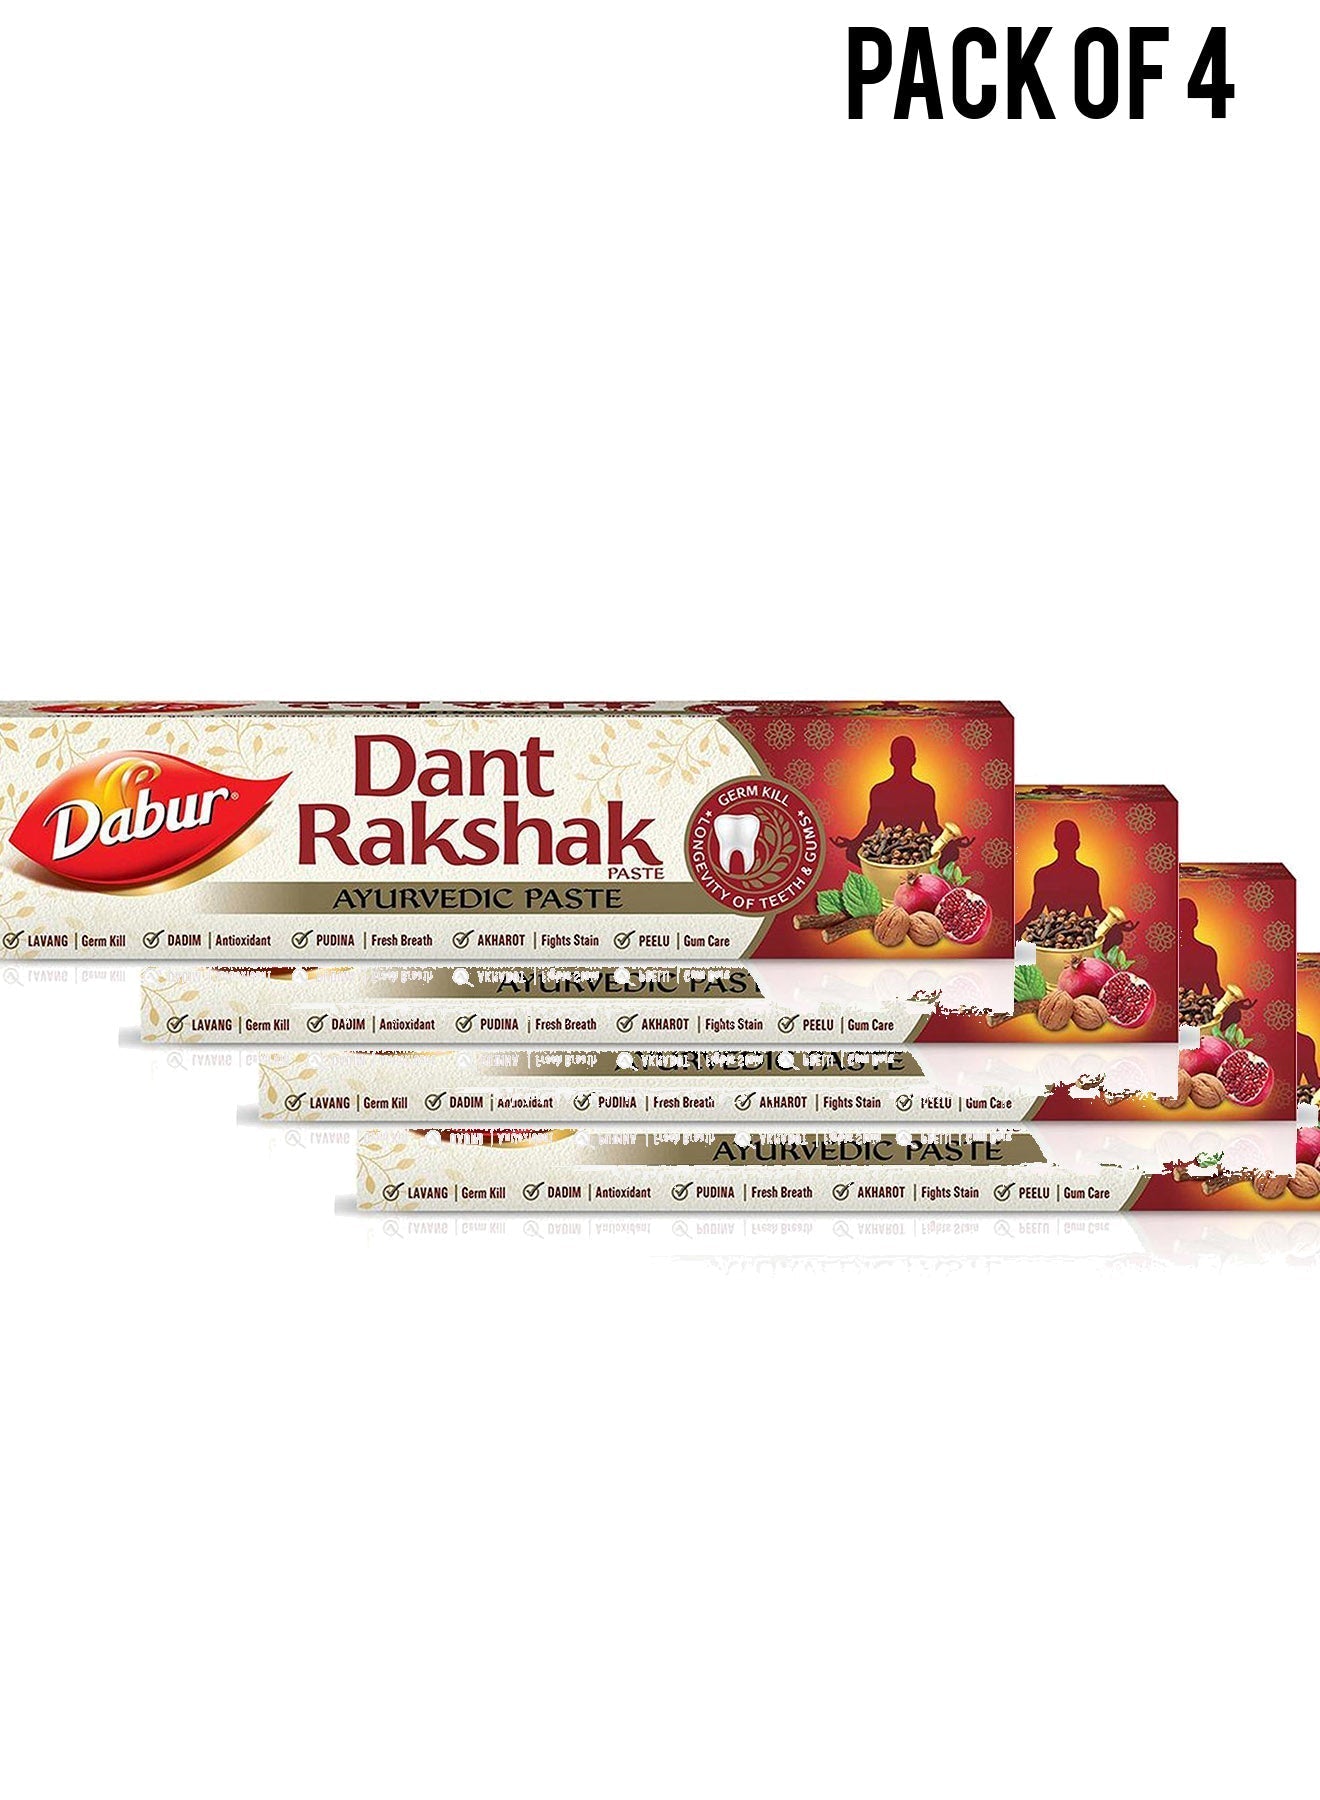 Dabur Dant Rakshak Ayurvedic Paste 175 g Value Pack of 4 